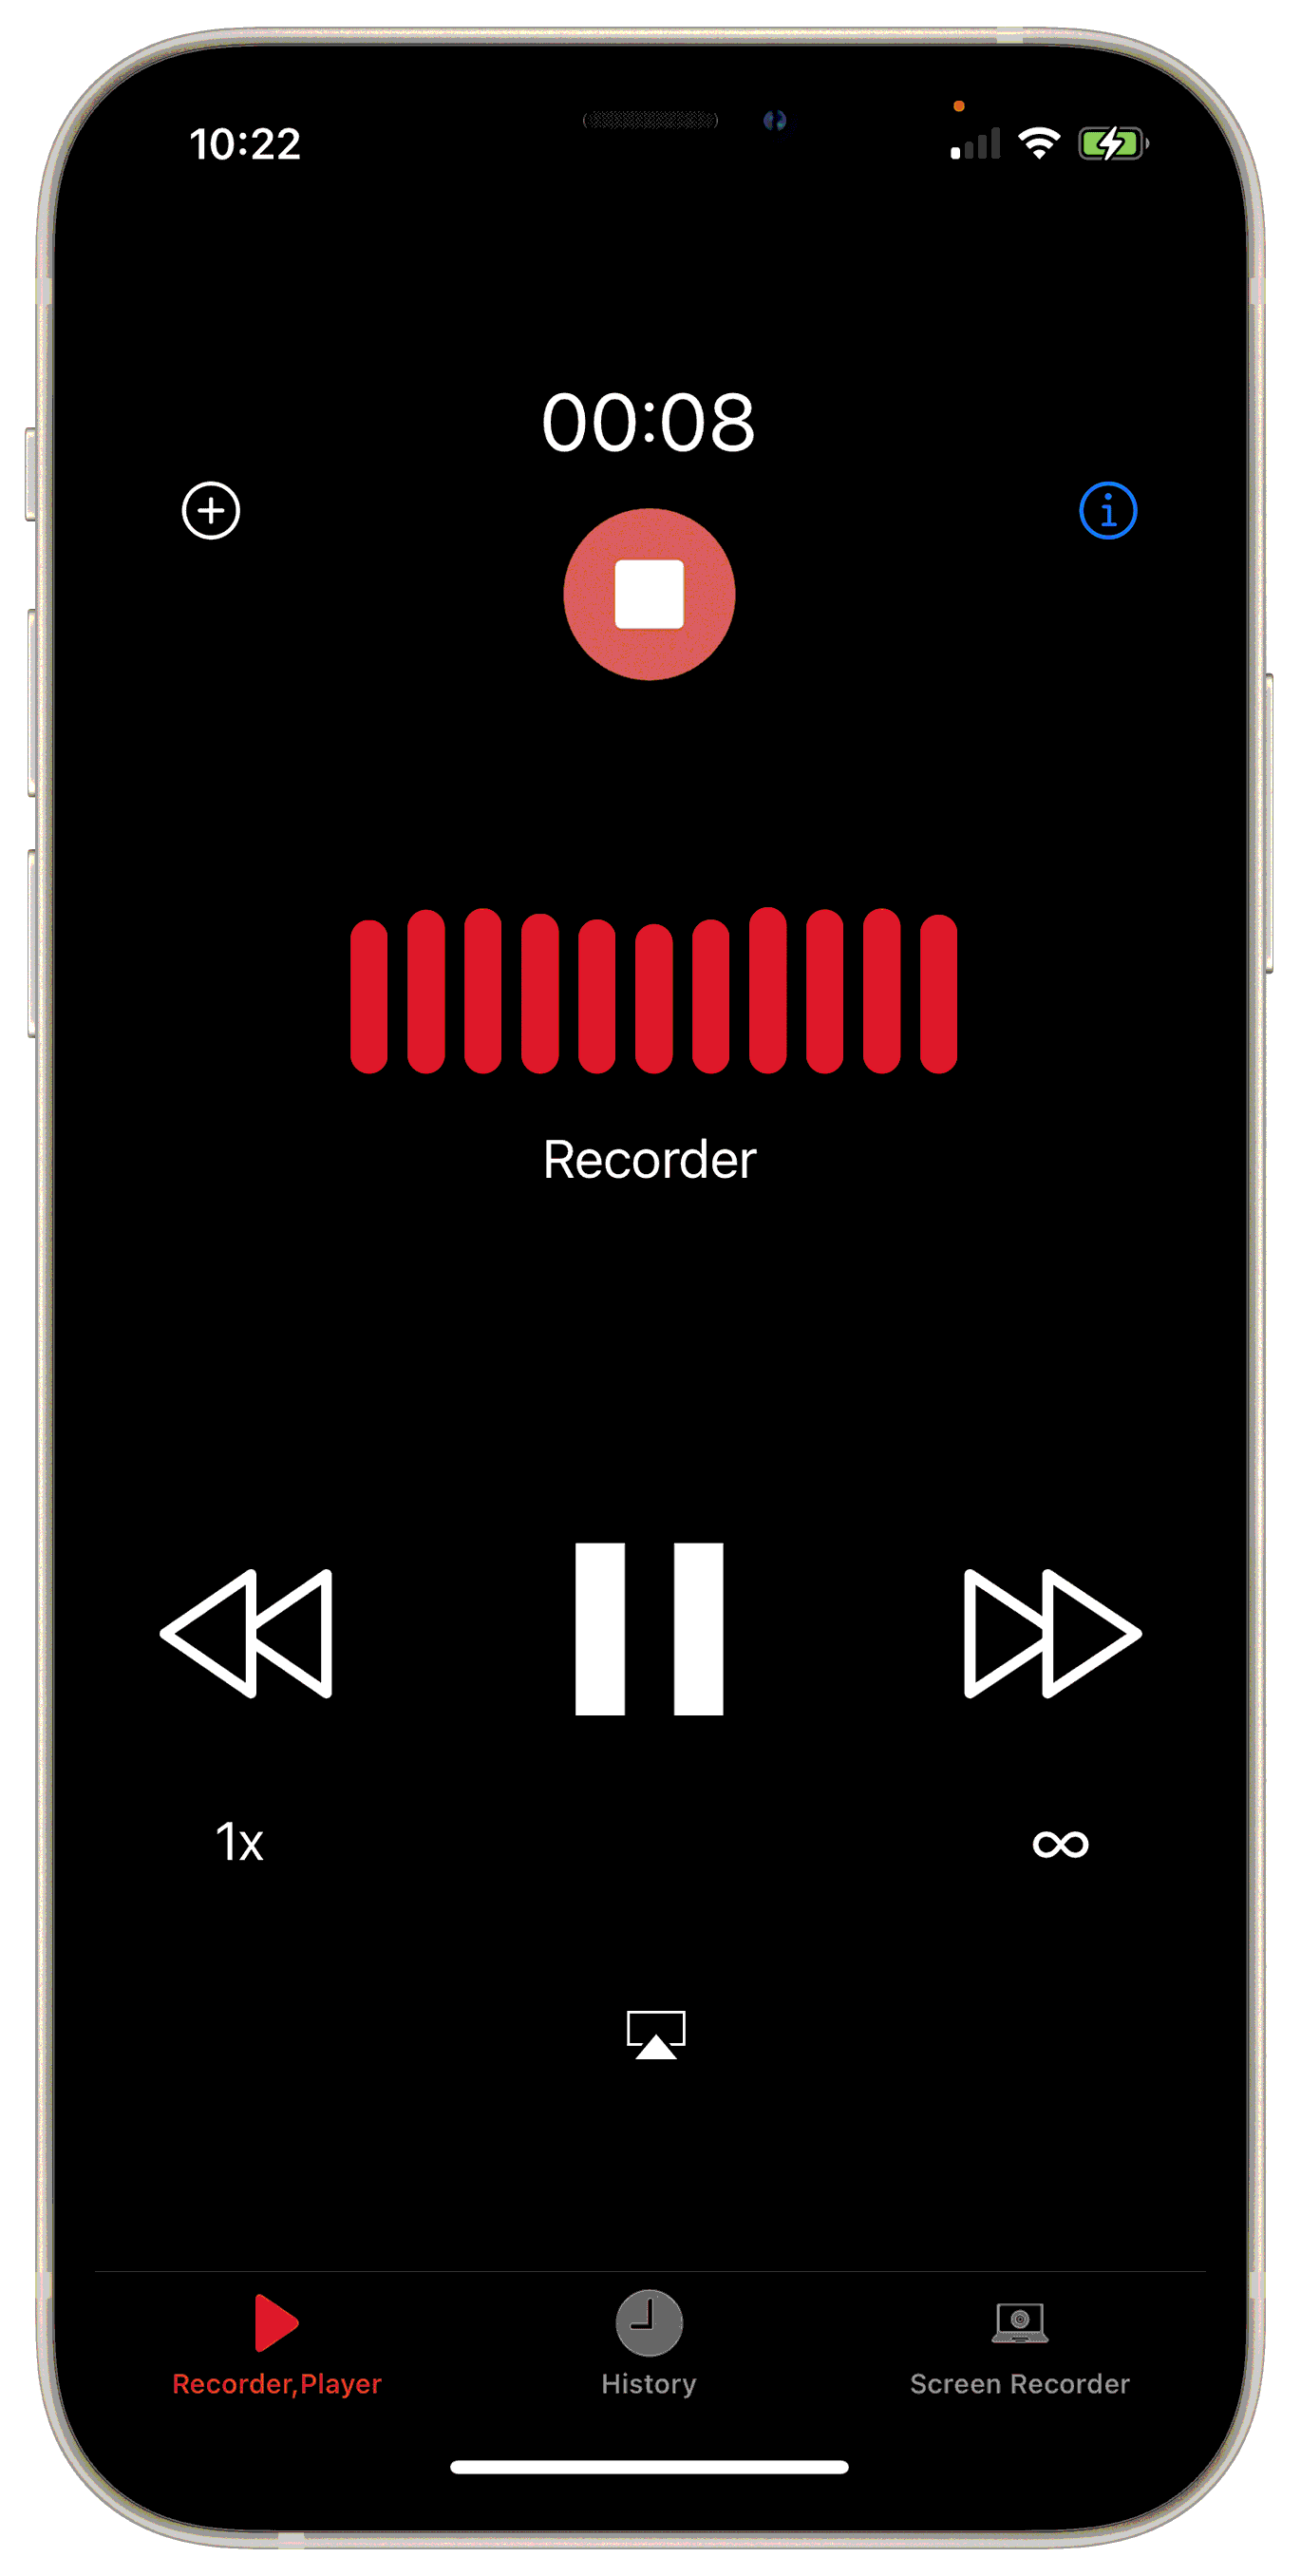 VoiceRecorder Free iPhone screenshot